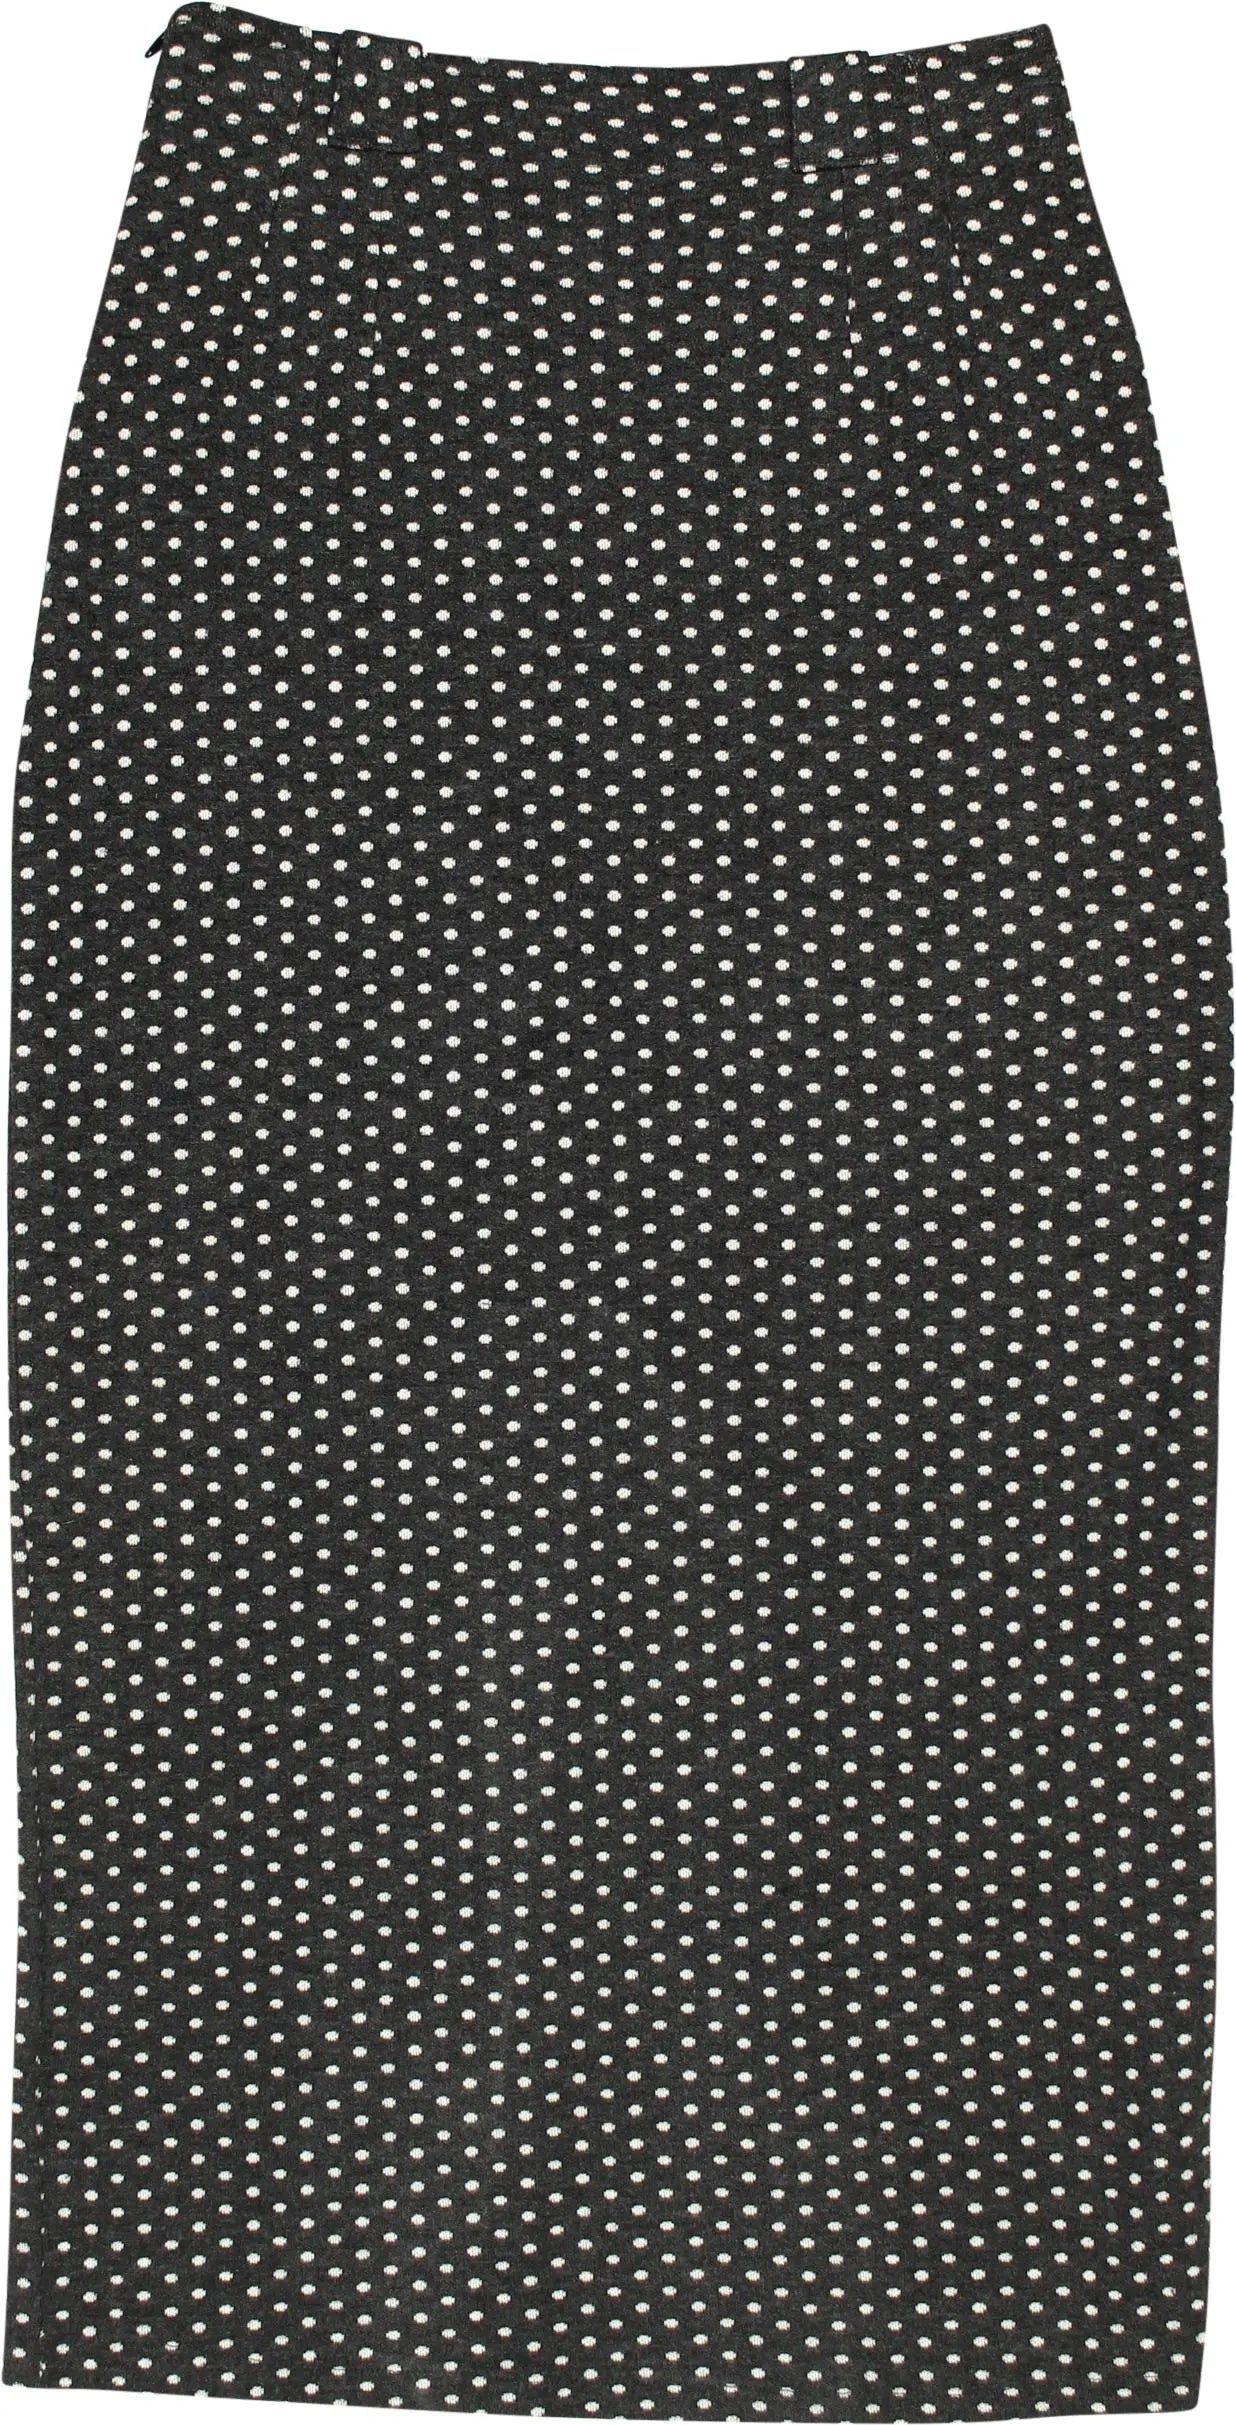 Positiv - 90s Polka Dot Skirt- ThriftTale.com - Vintage and second handclothing